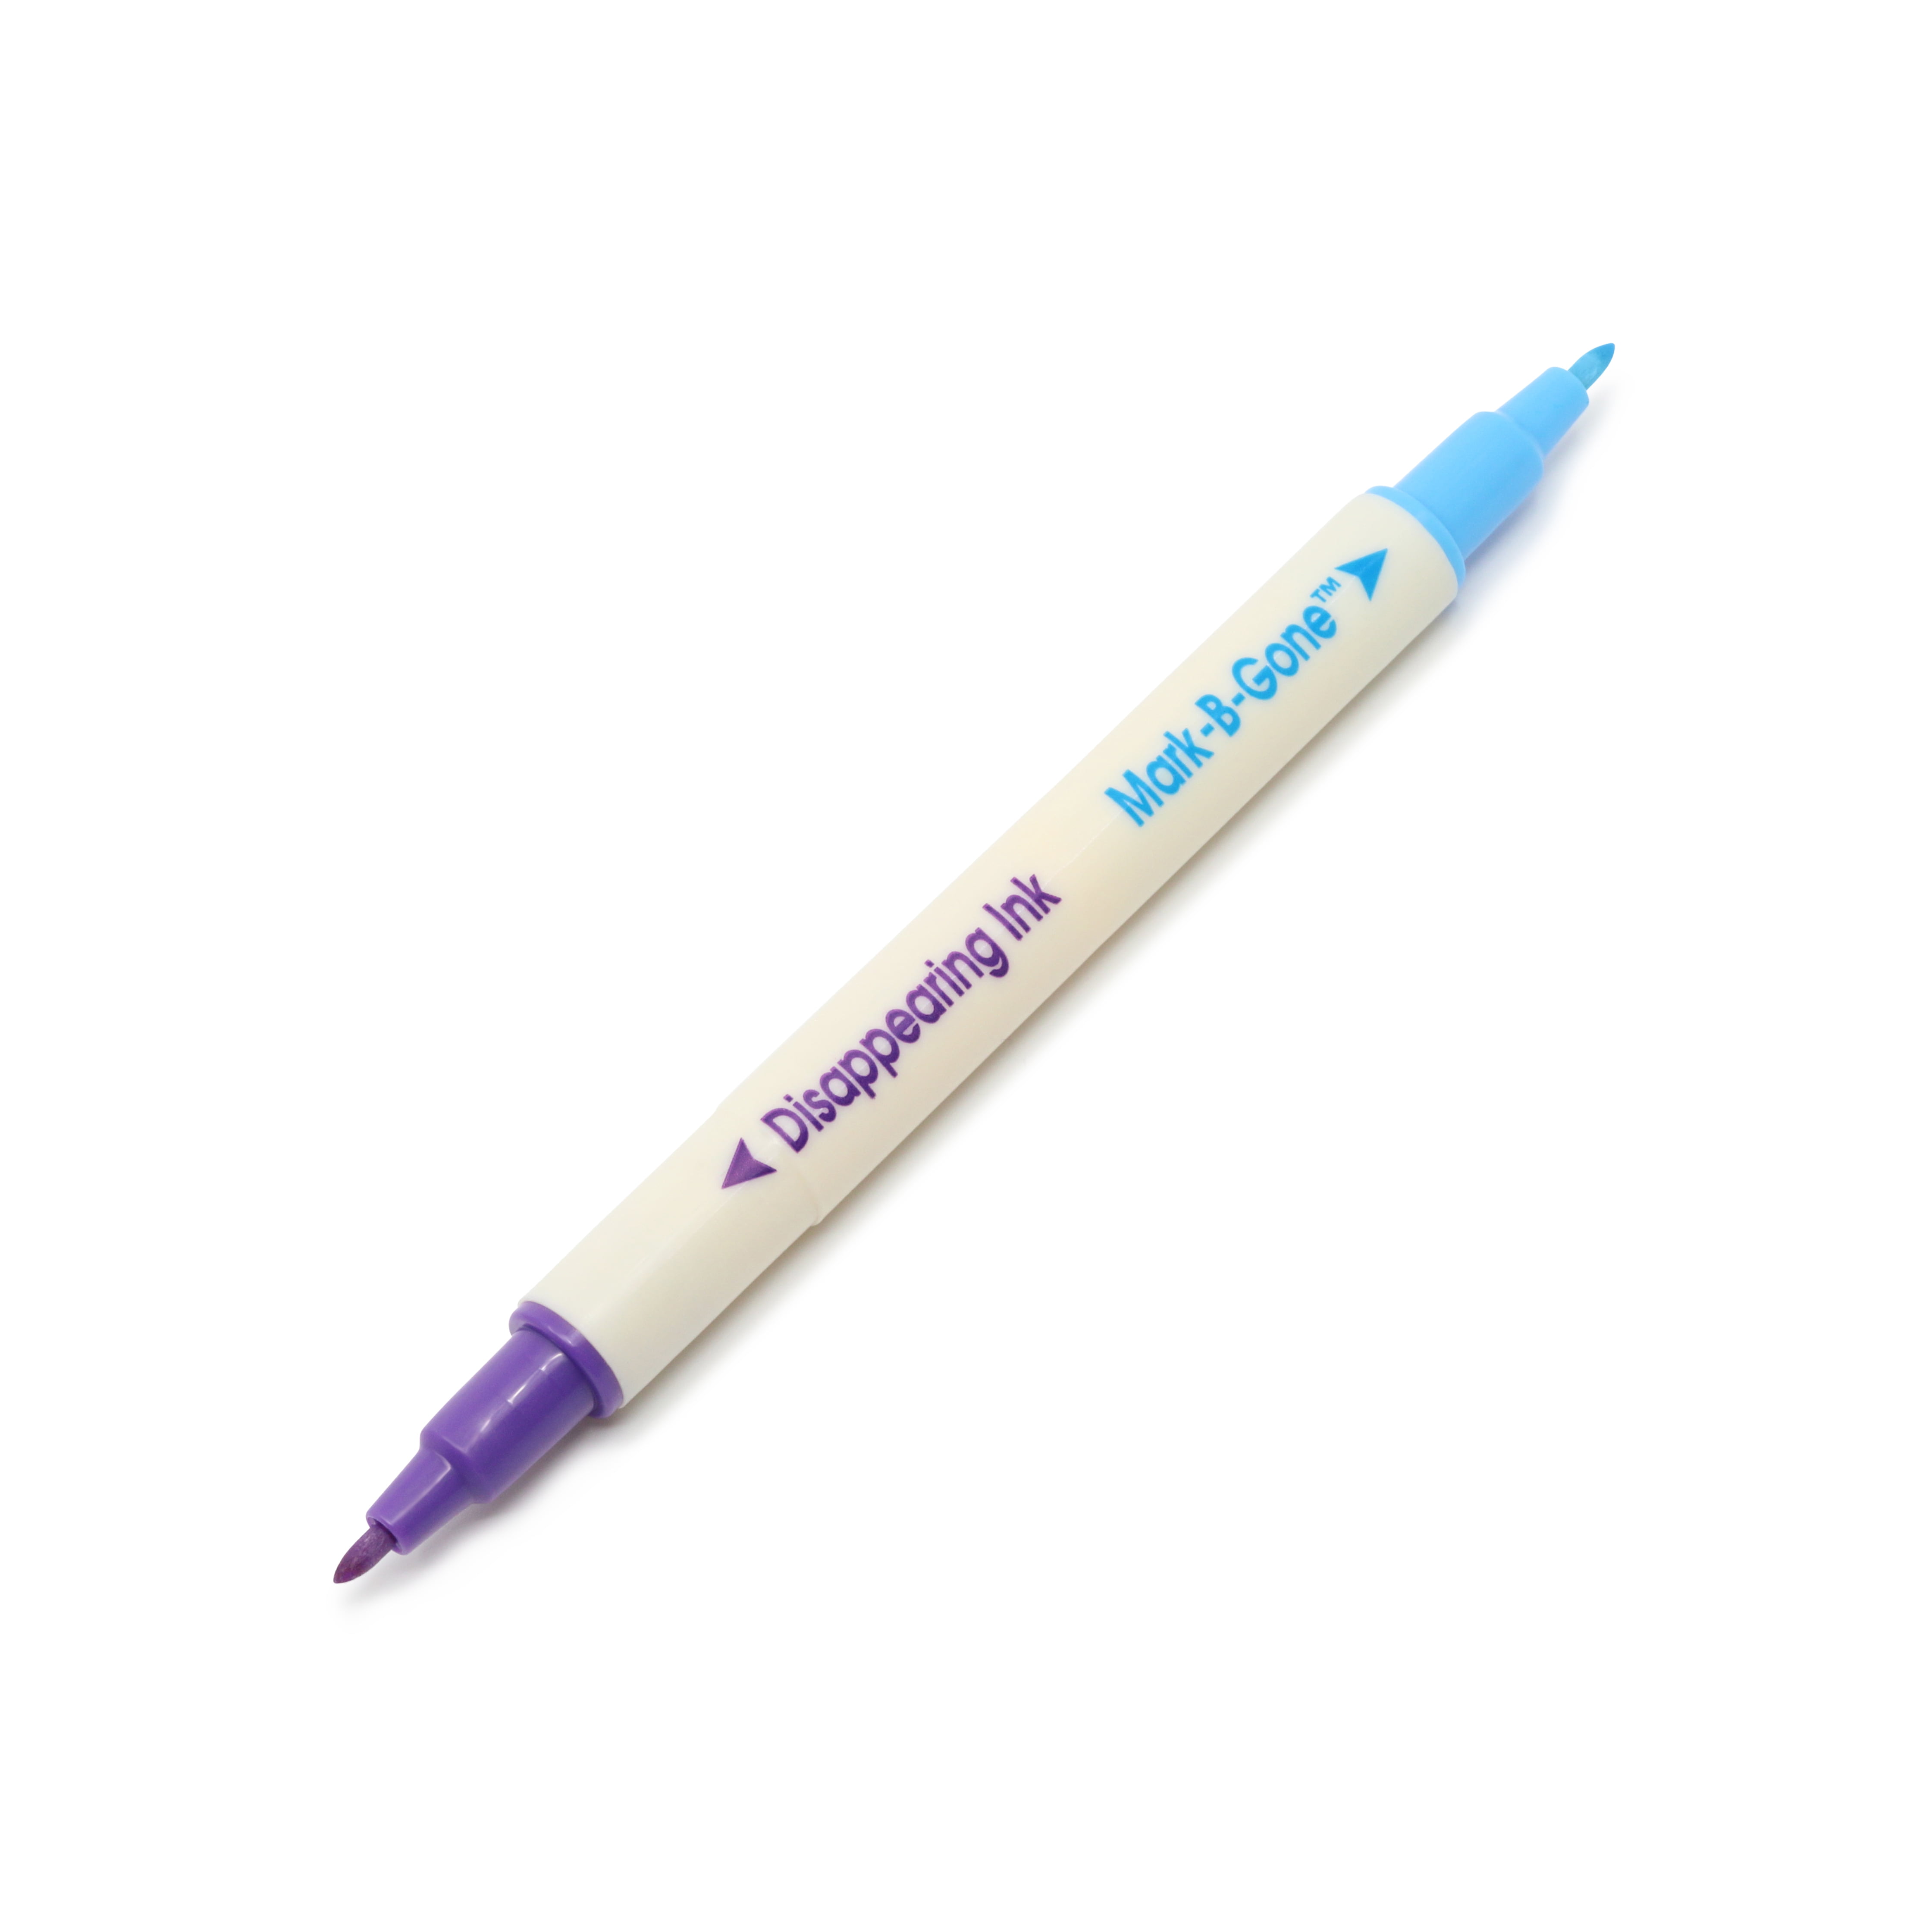 Dritz® Heat Erase Marking Pens, 5ct.